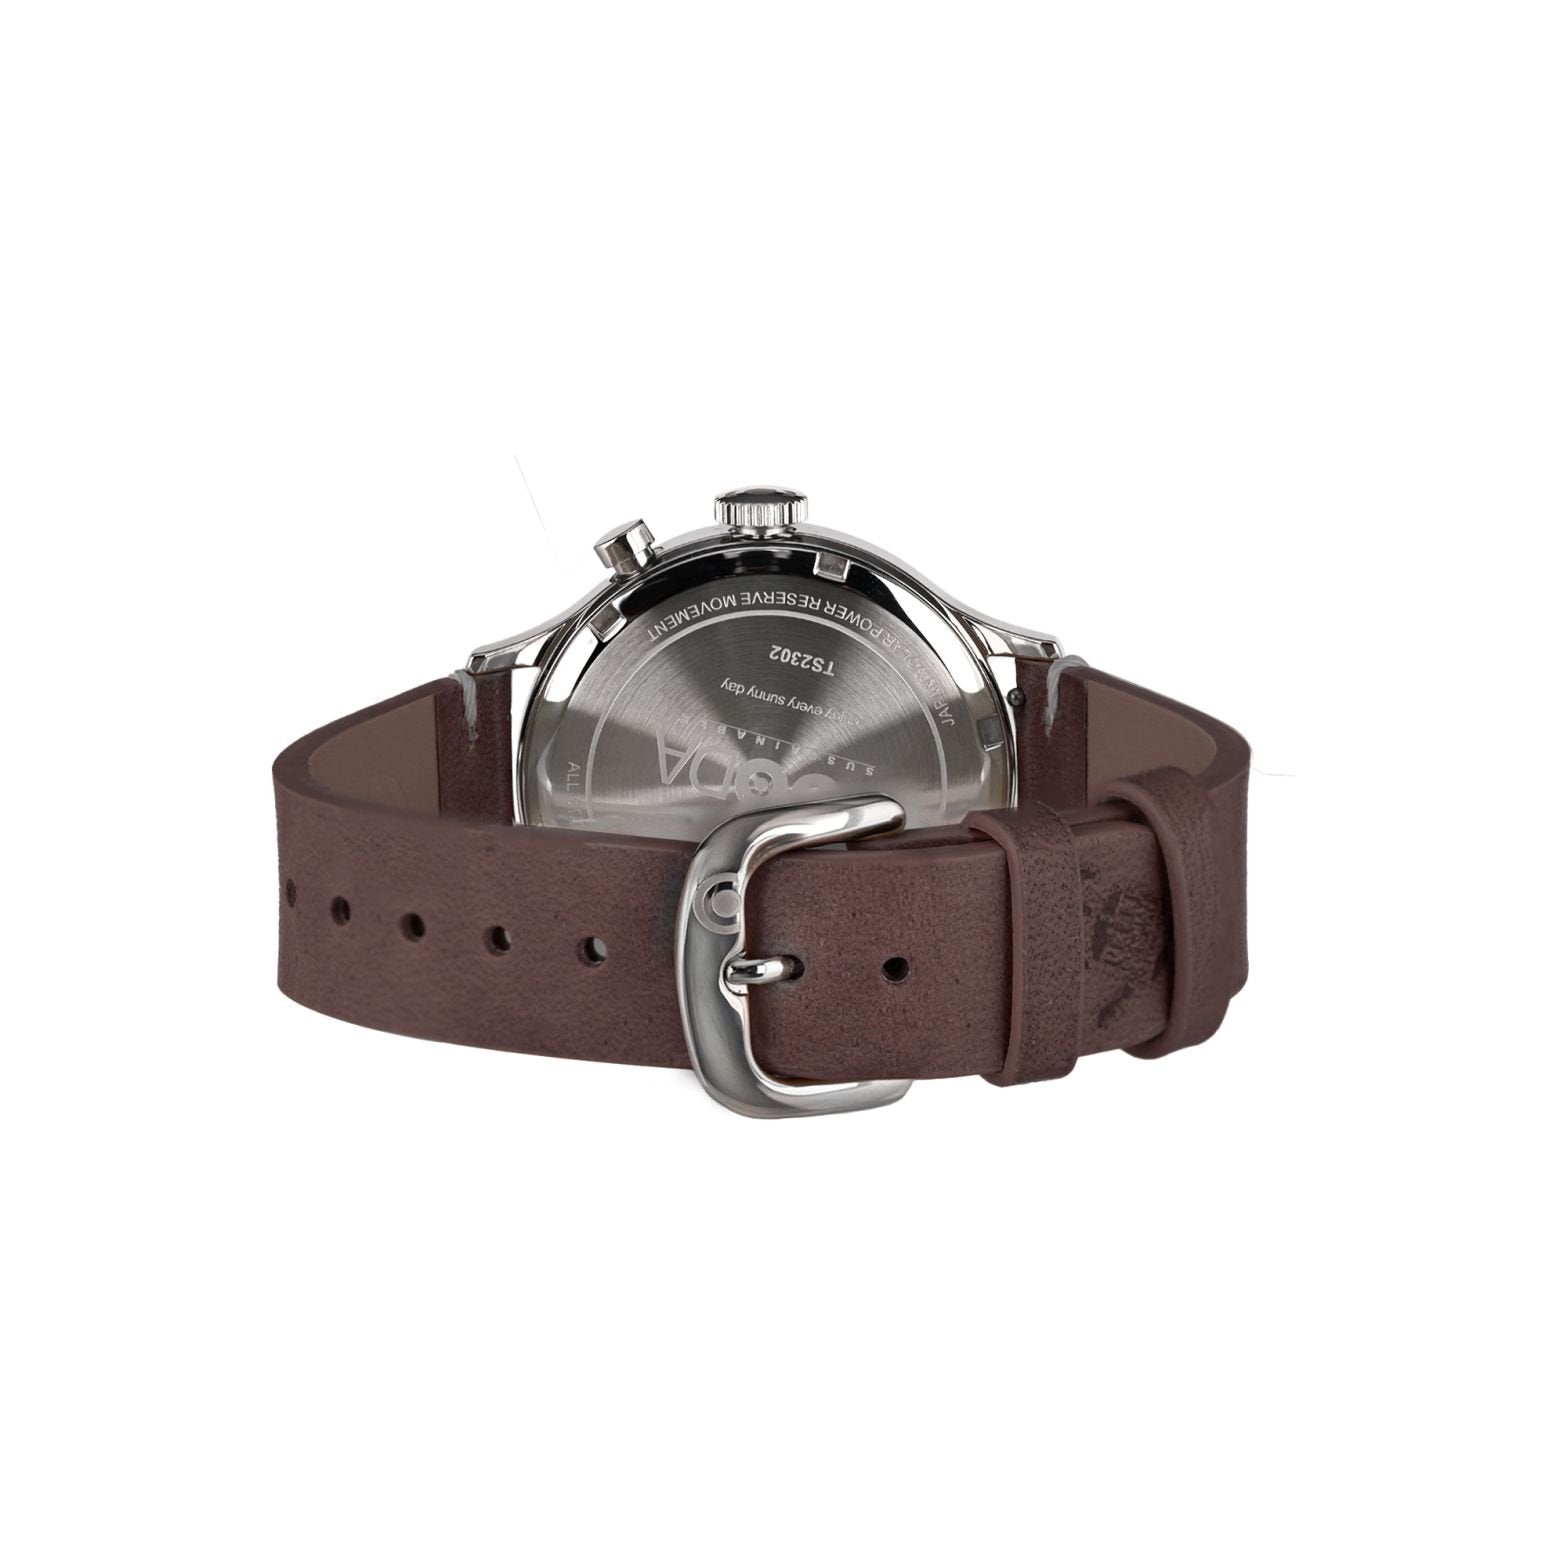 Sooda Solar Watch, Dark Brown | TACS - Wake Concept Store  